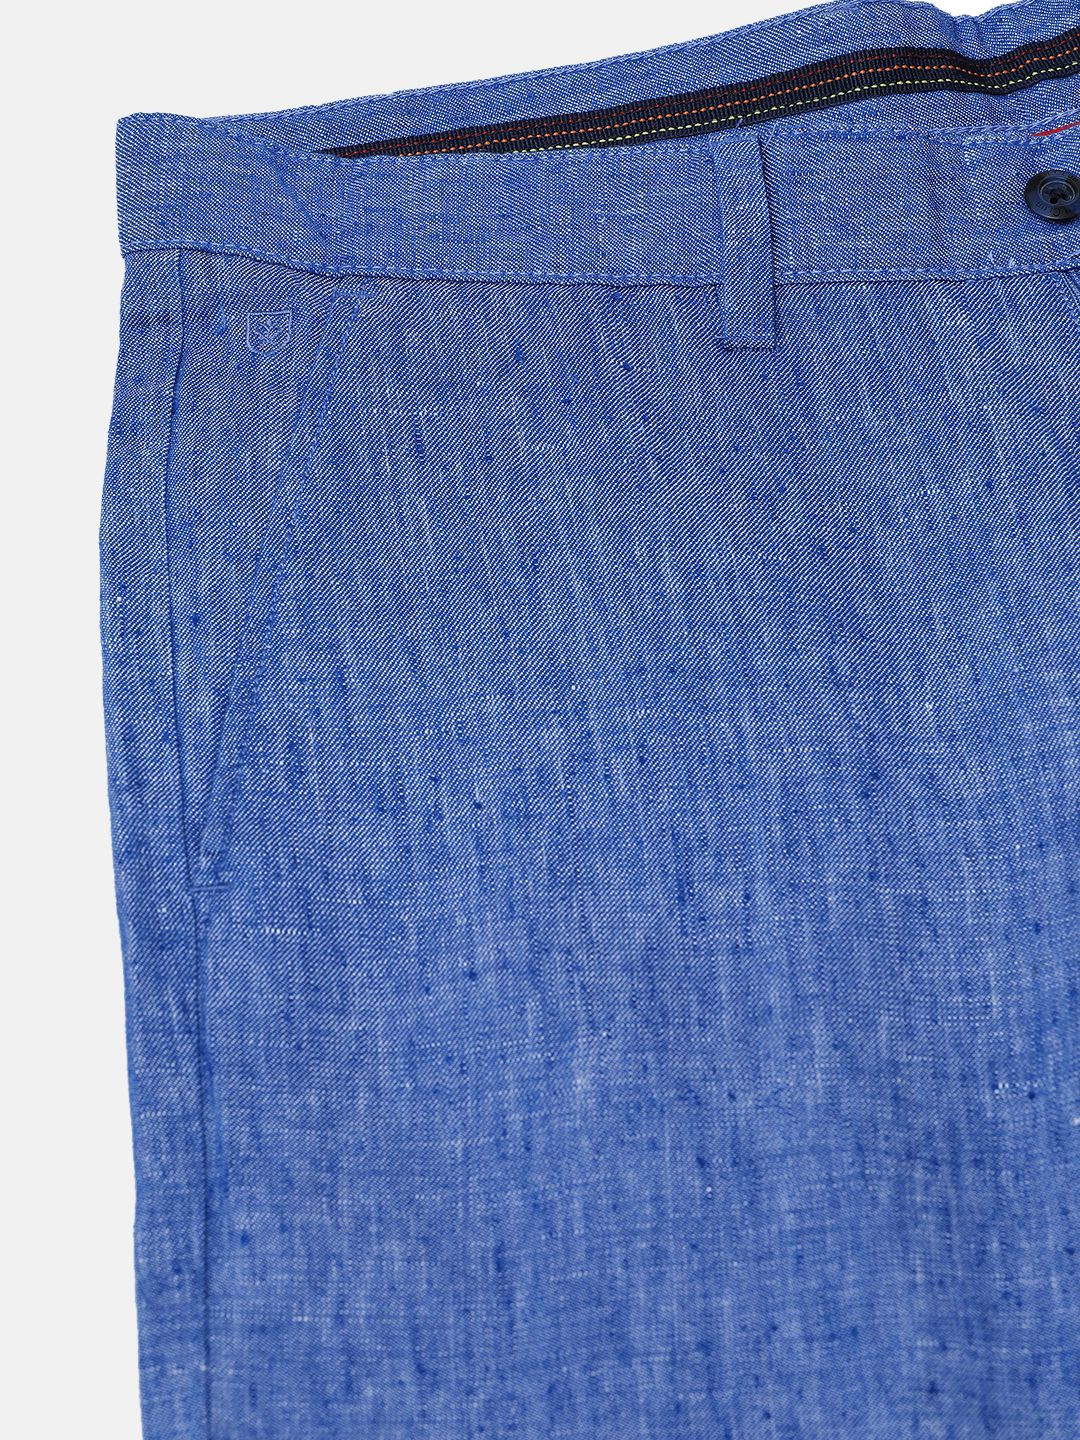 Buy Men Blue Slim Fit Textured Casual Trousers Online  623857  Allen Solly